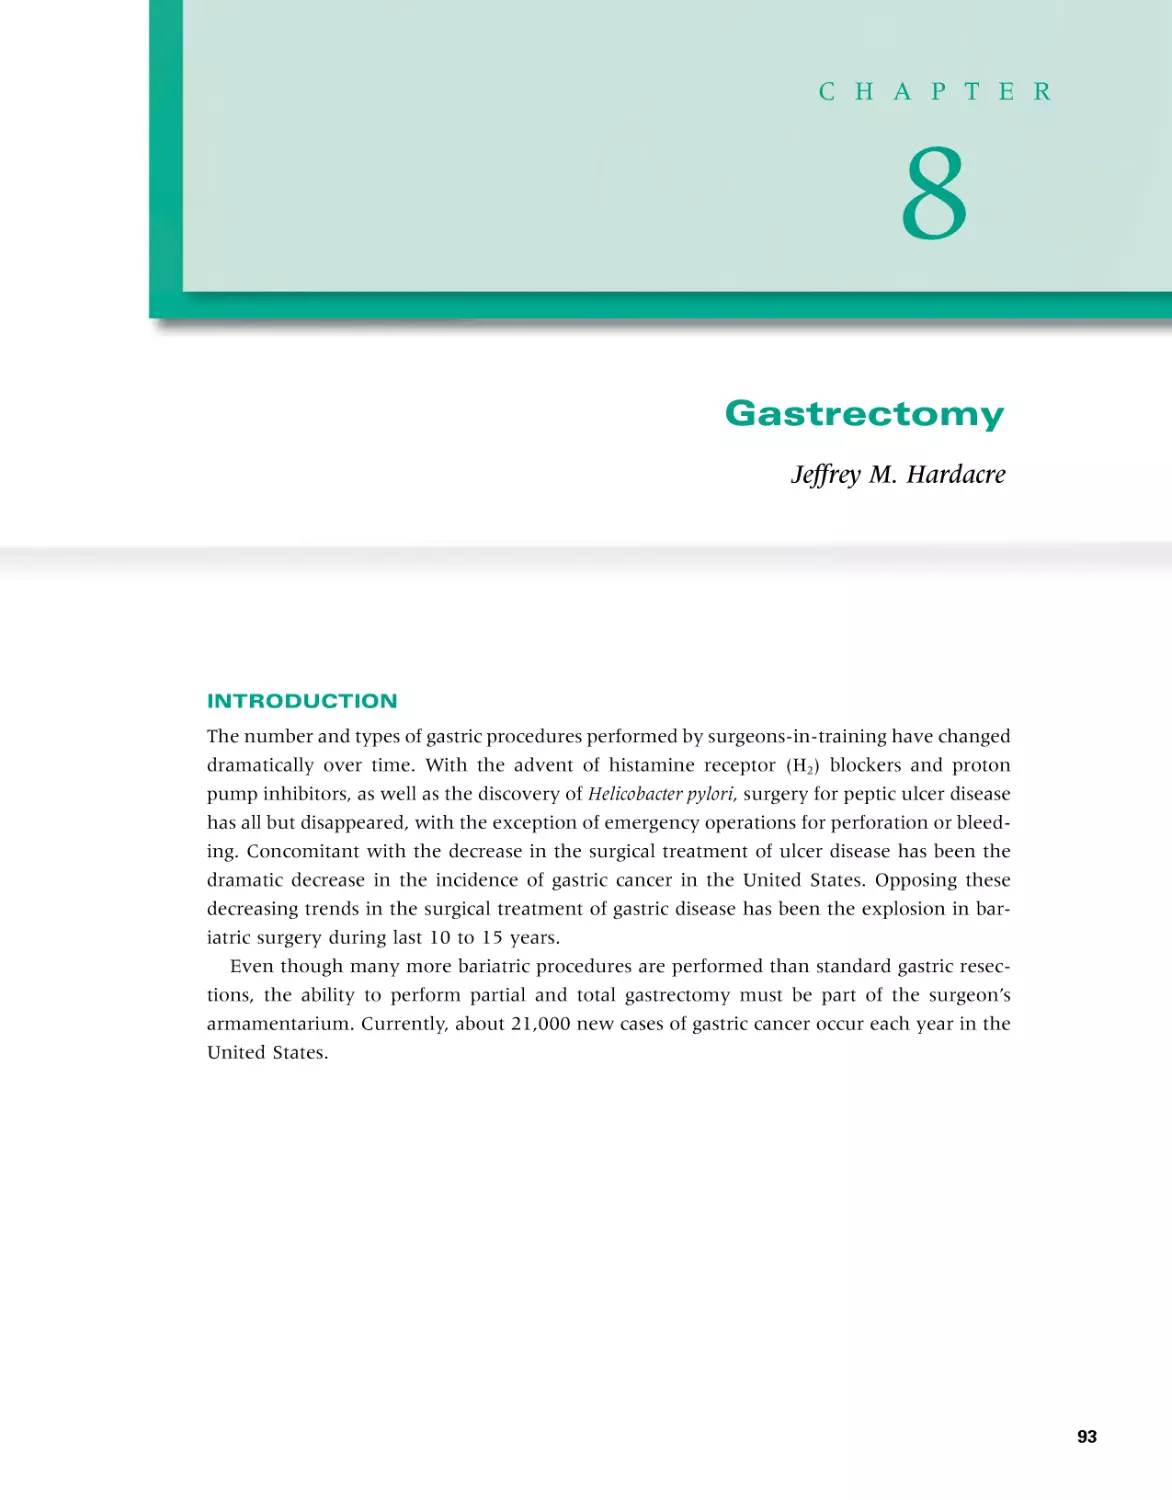 8 Gastrectomy
Introduction